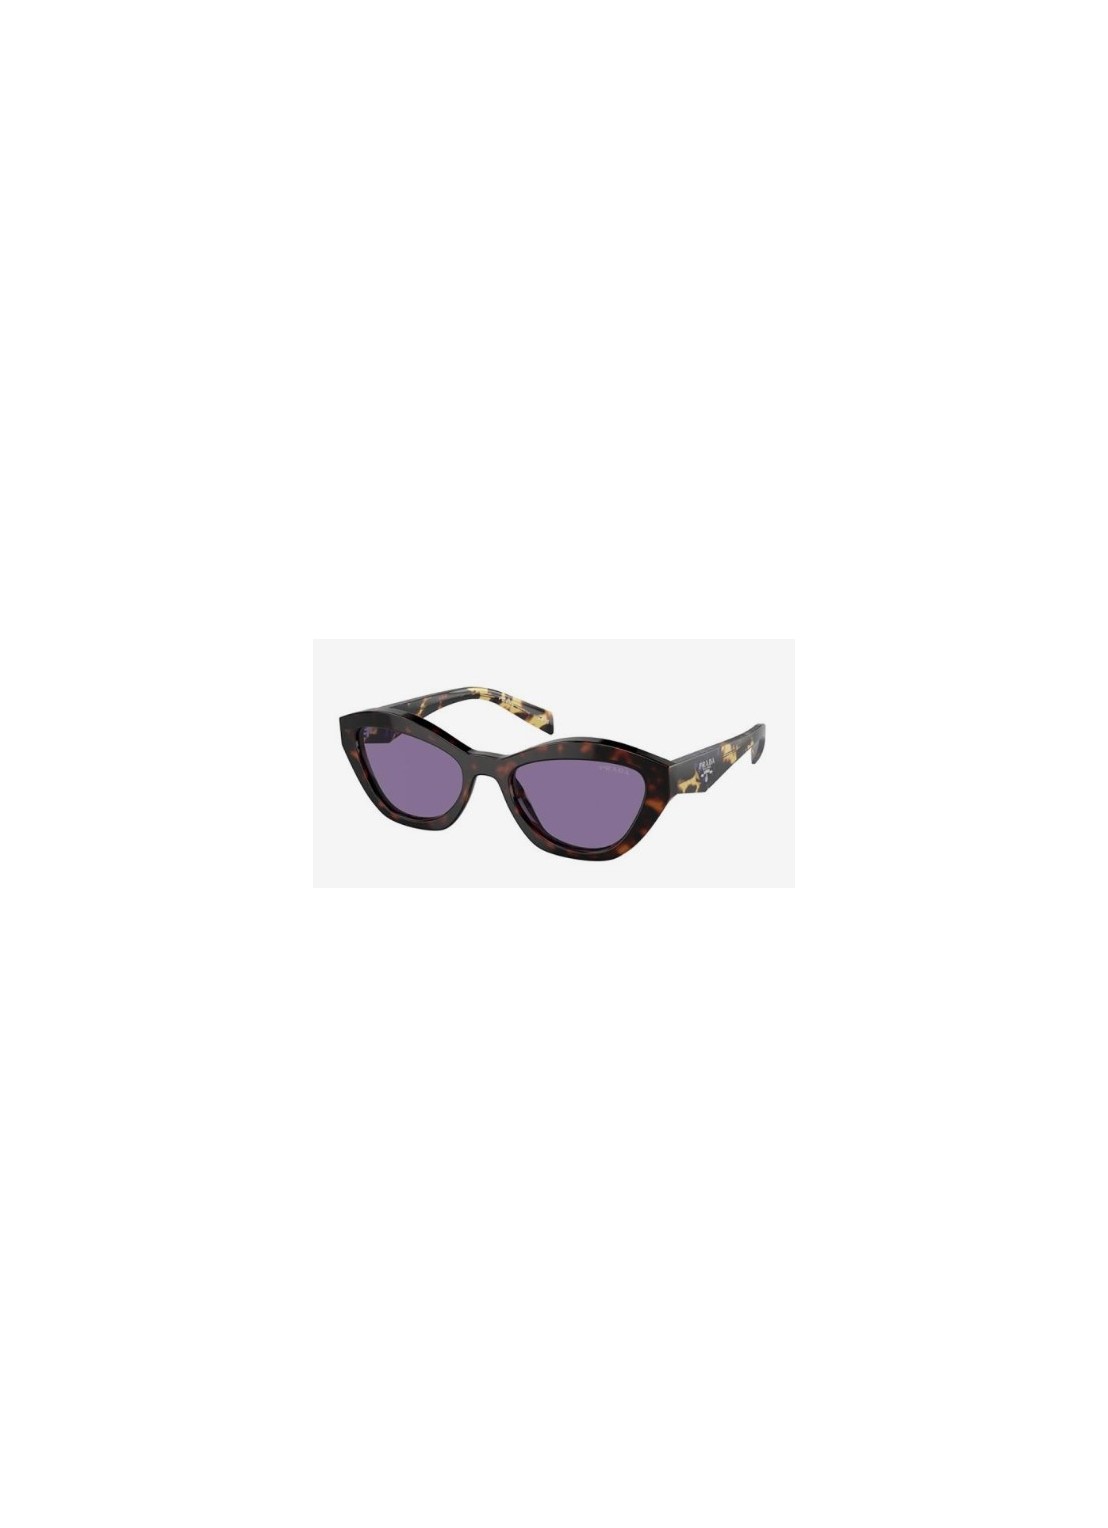 Gafas prada sunglasses woman 0pra02s 0pra02s 17n50b talla transparente
 